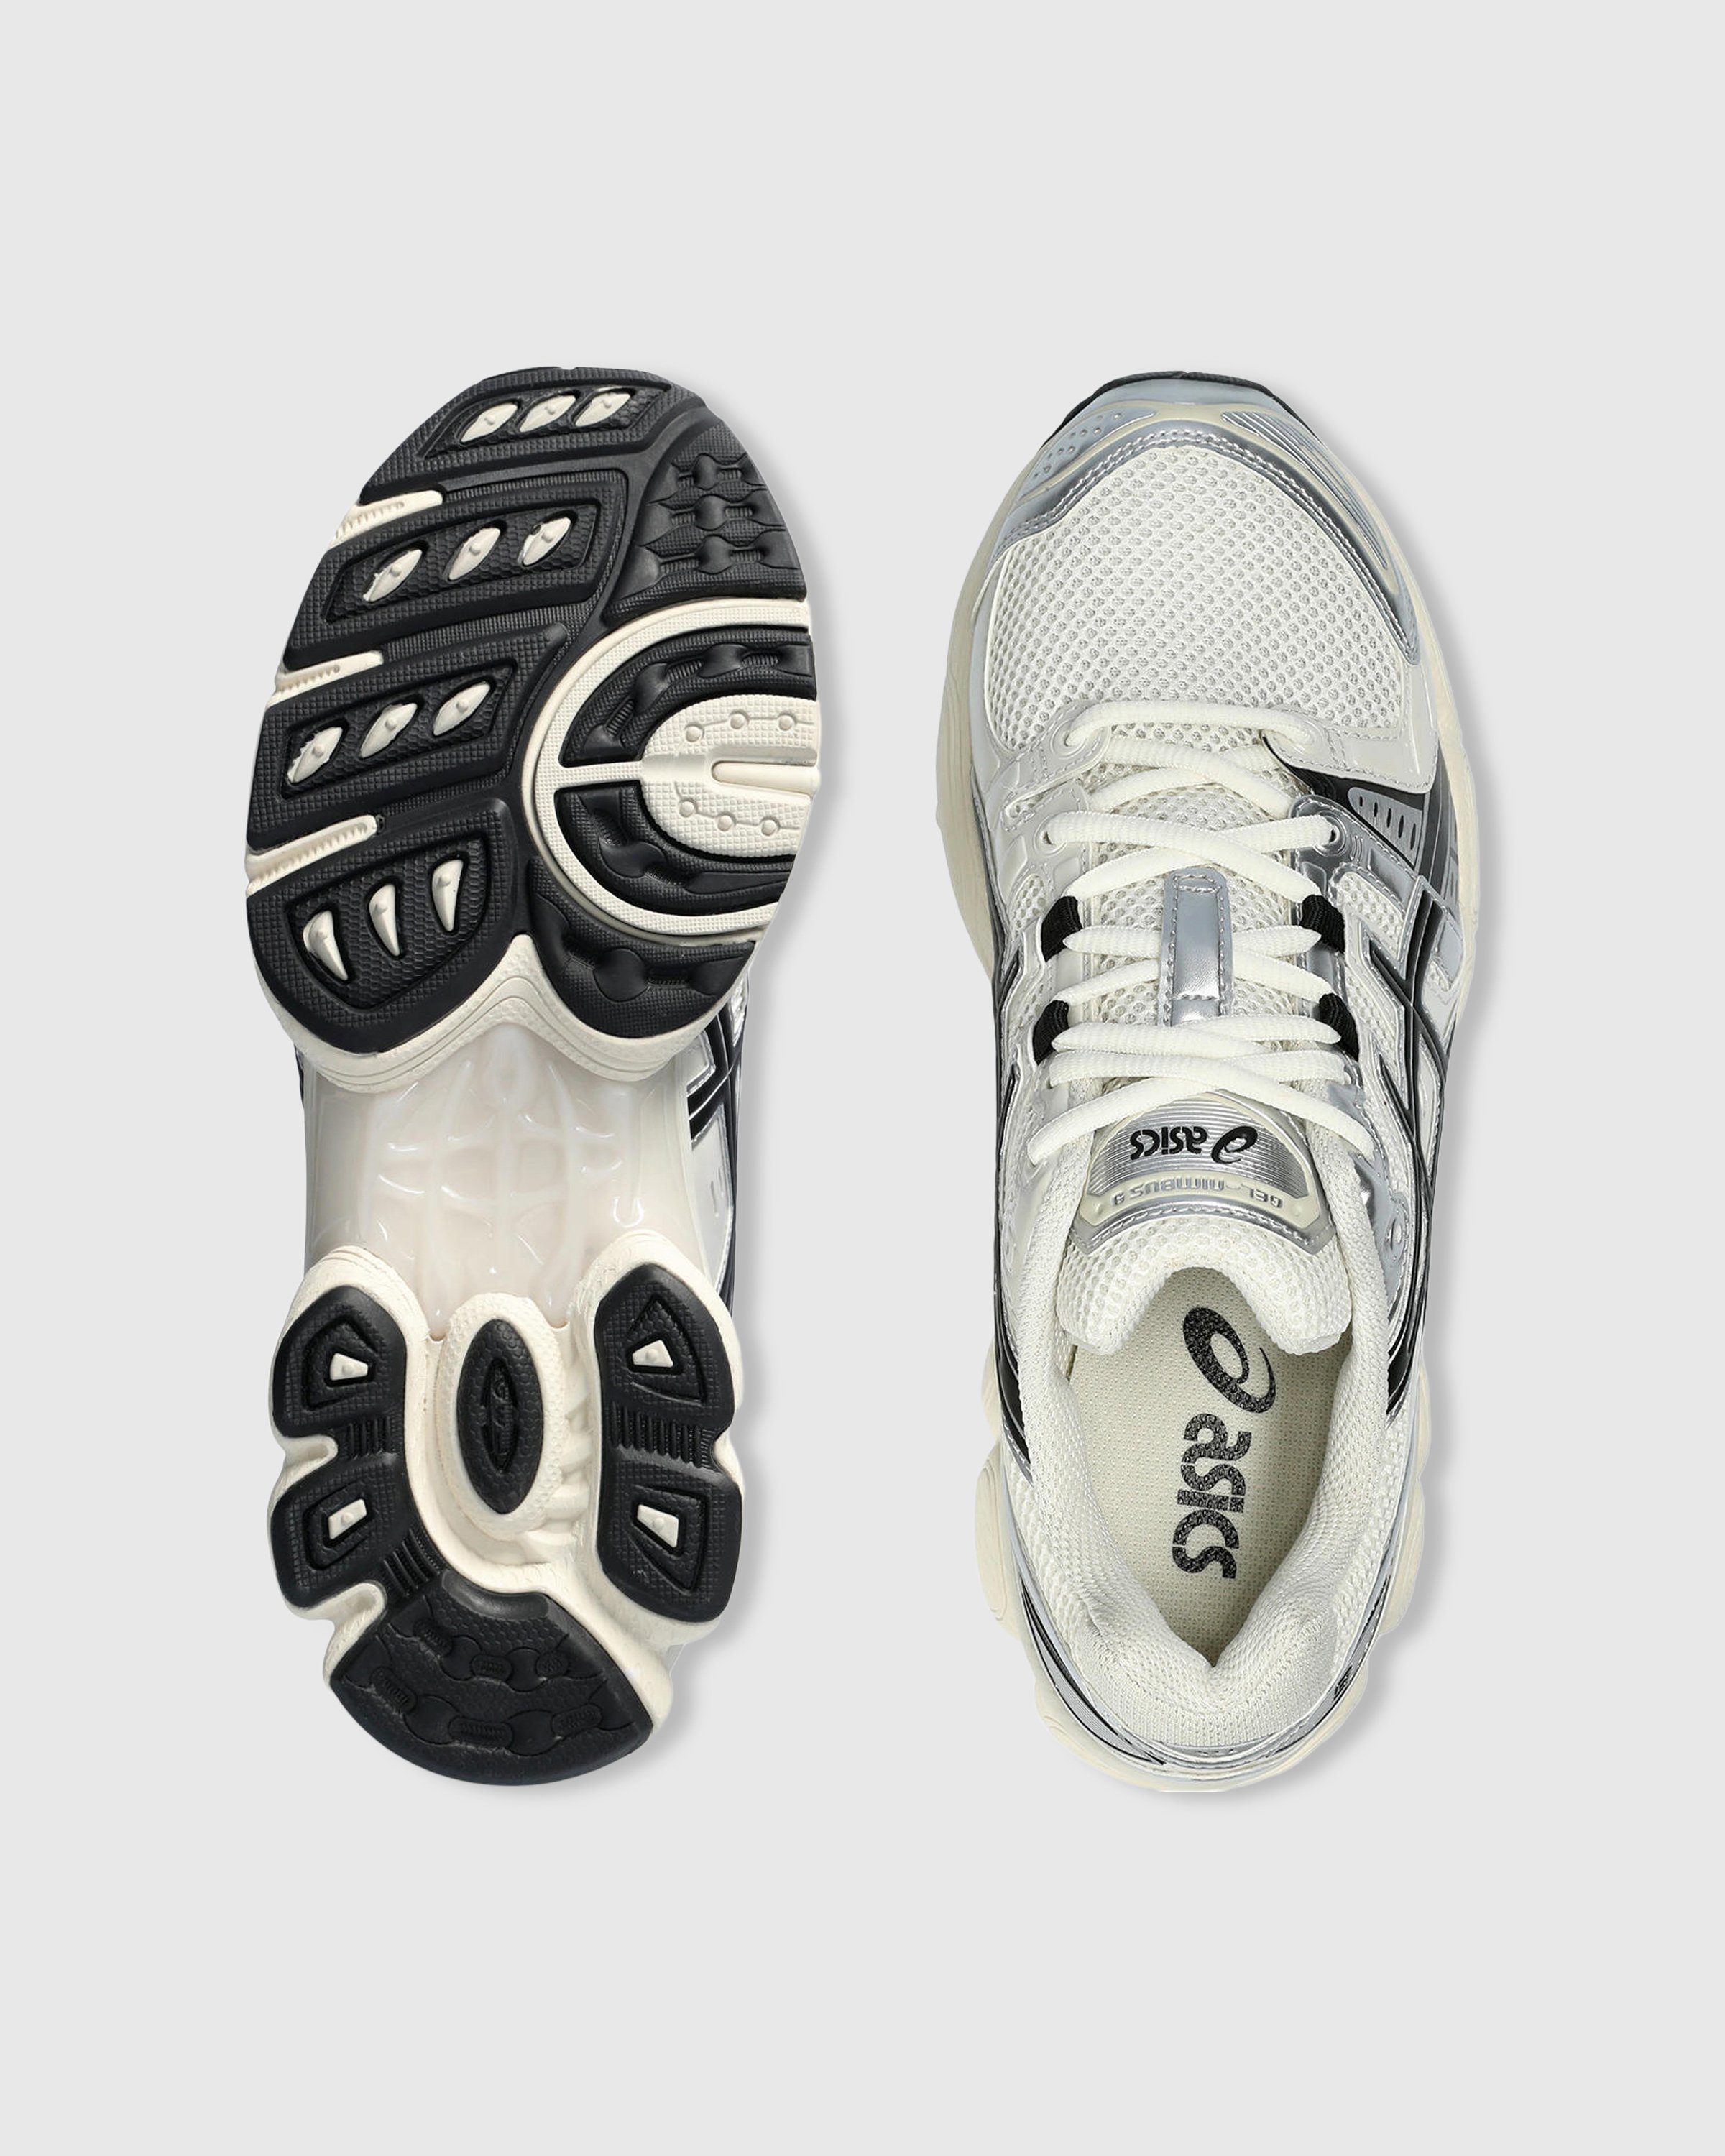 asics - GEL-NIMBUS 9 CREAM/BLACK - Footwear - White - Image 6